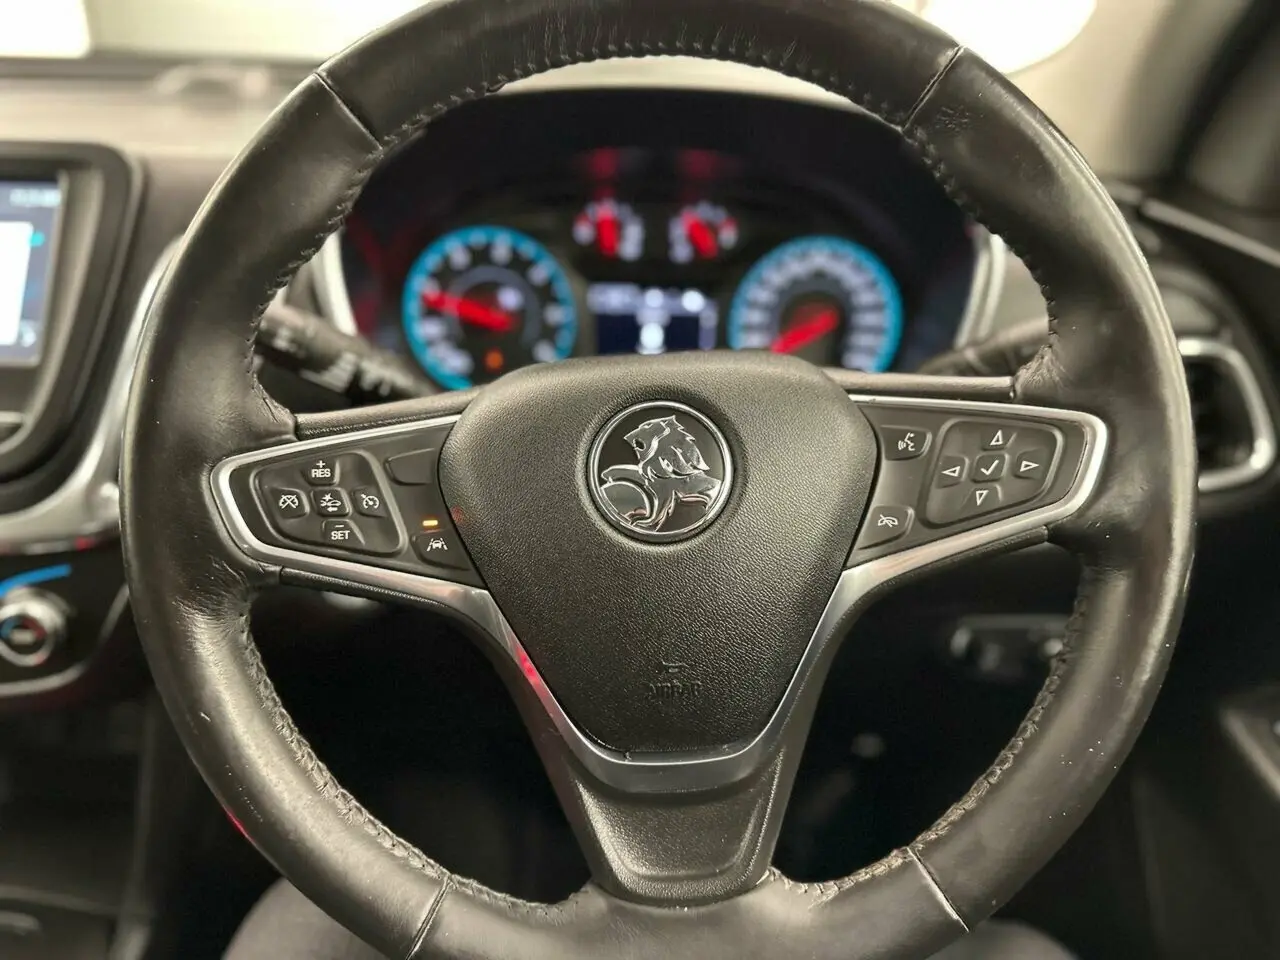 2019 Holden Equinox Image 18